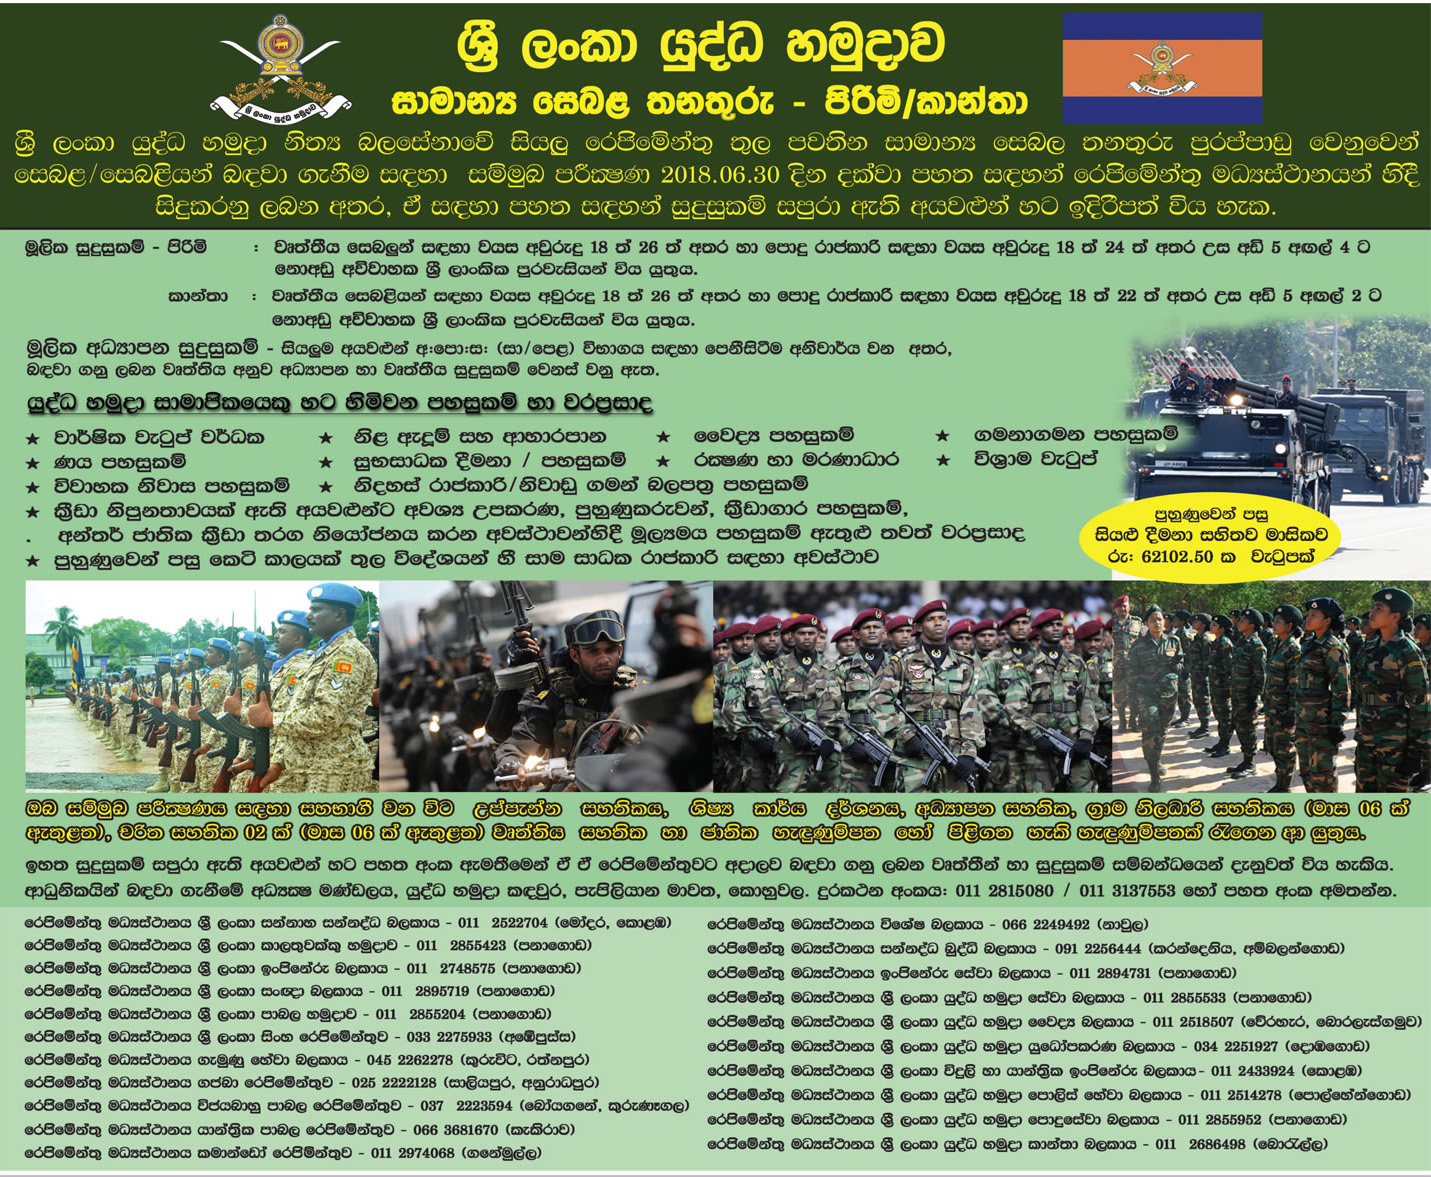 Soldiers (Male / Female) - Sri Lanka Army